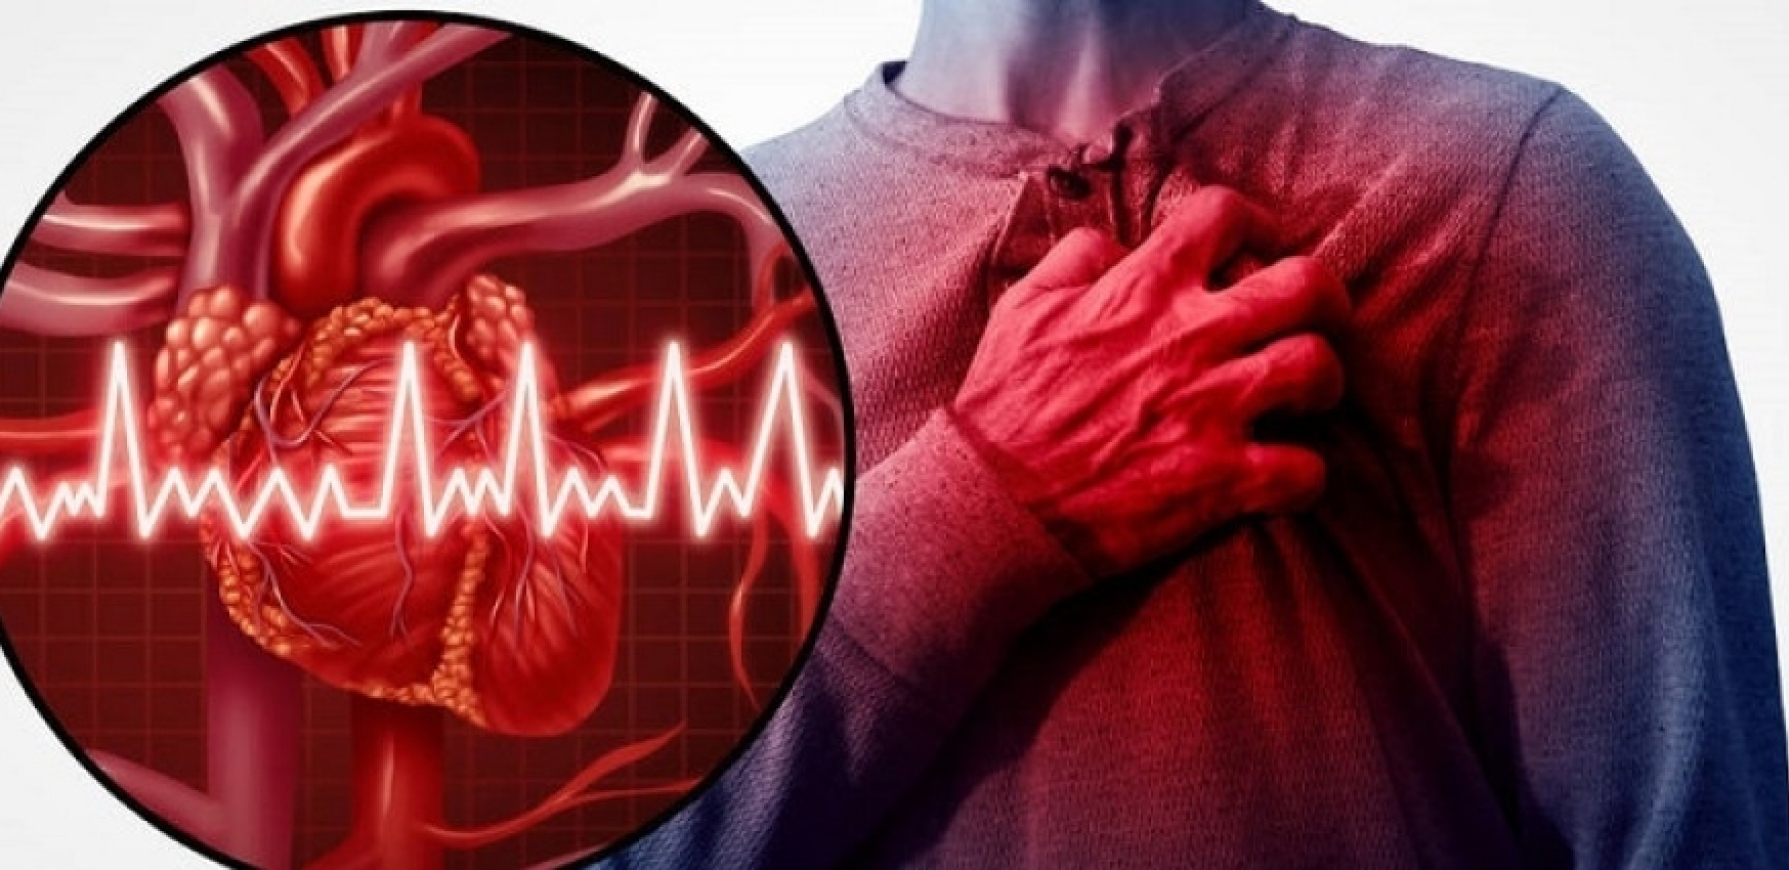 5 SIGNALA DA VAM PRETI INFARKT ZA MESEC DANA: Evo kako da sprečite srčani udar!